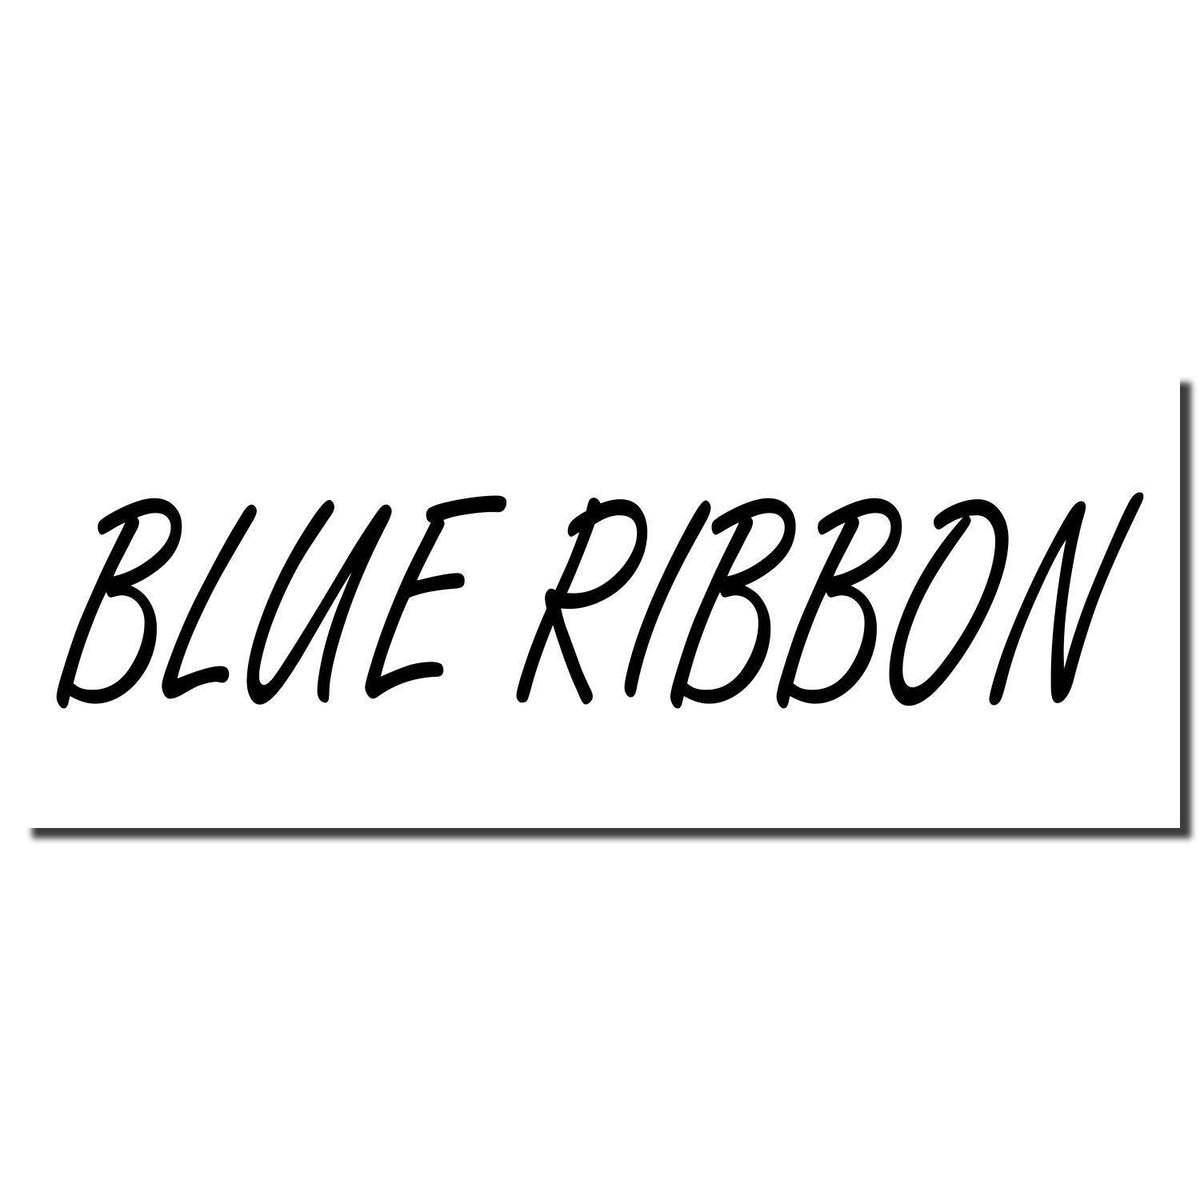 Enlarged Imprint Large Self Inking Blue Ribbon Stamp Sample